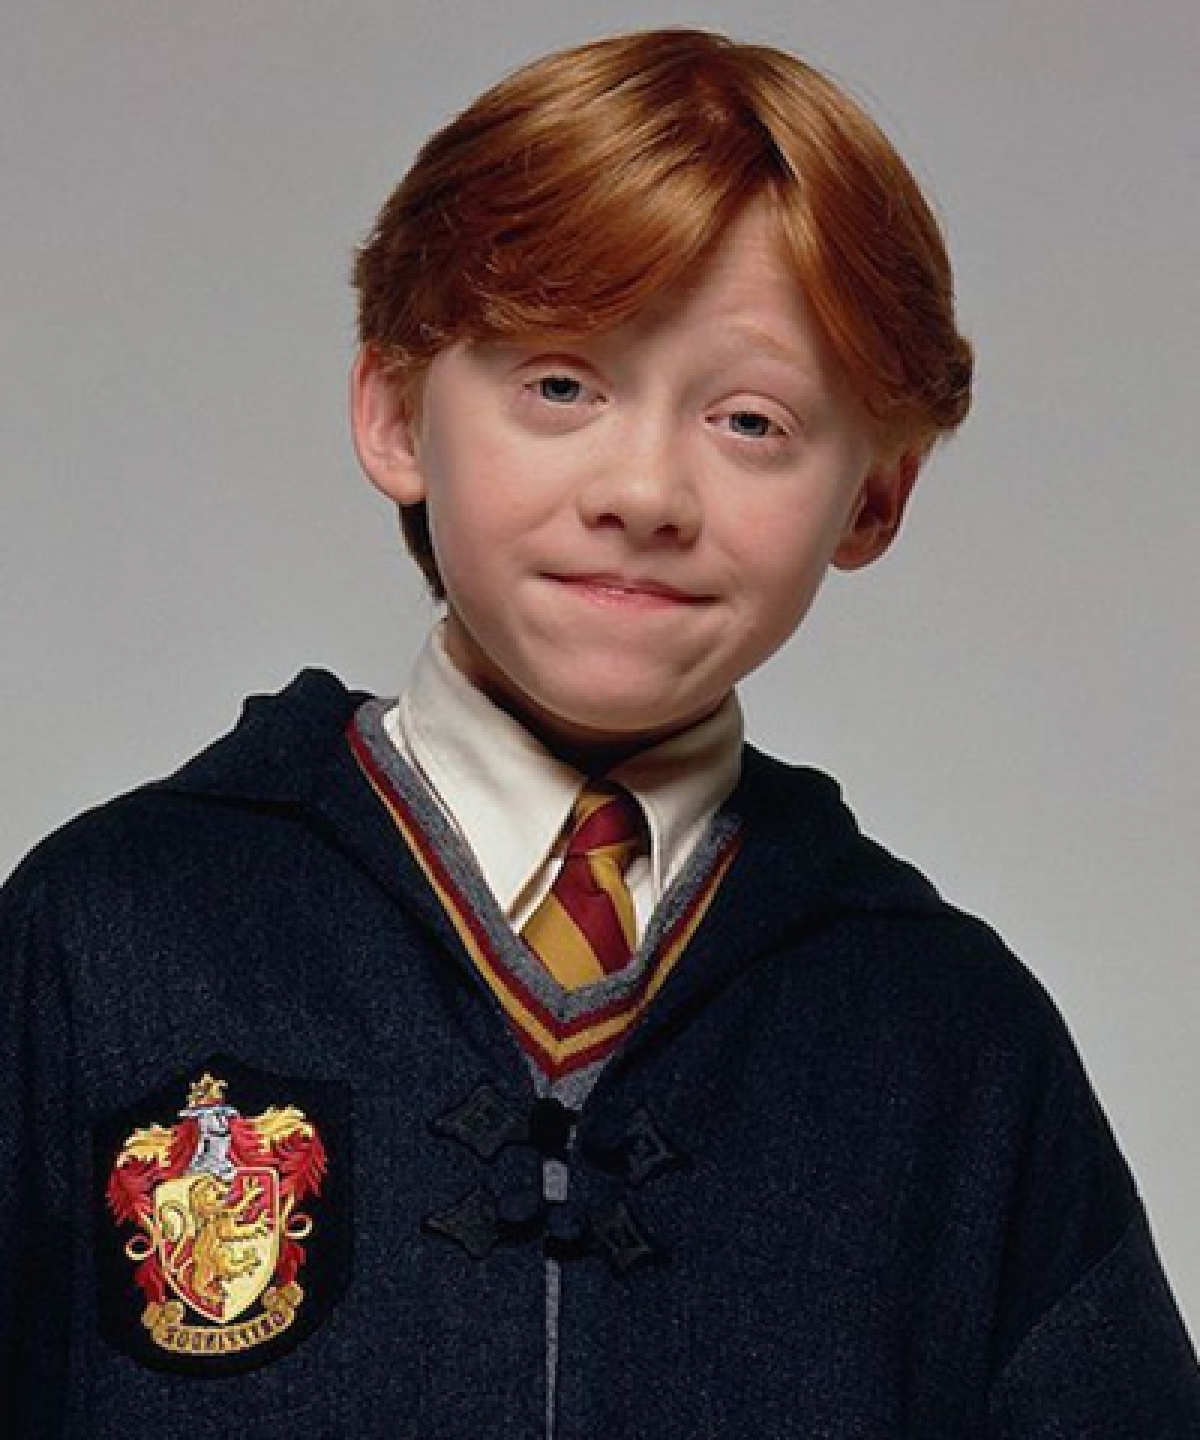 Rupert Grint khi lần đầu casting Harry Potter